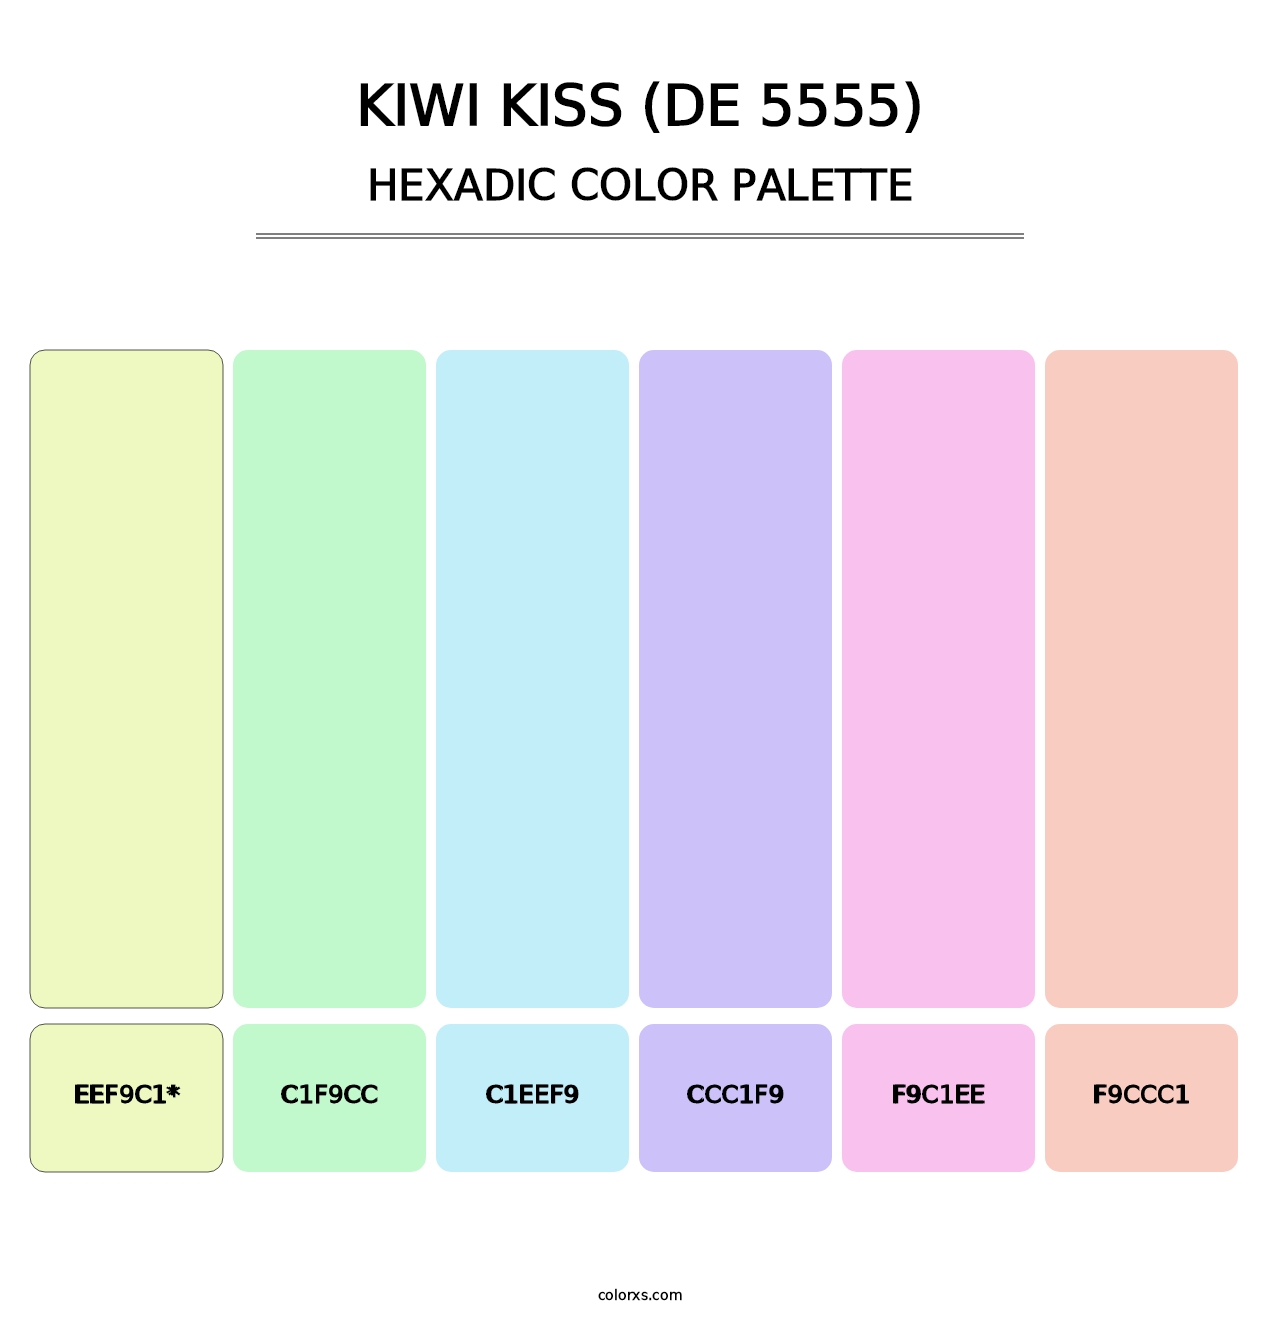 Kiwi Kiss (DE 5555) - Hexadic Color Palette